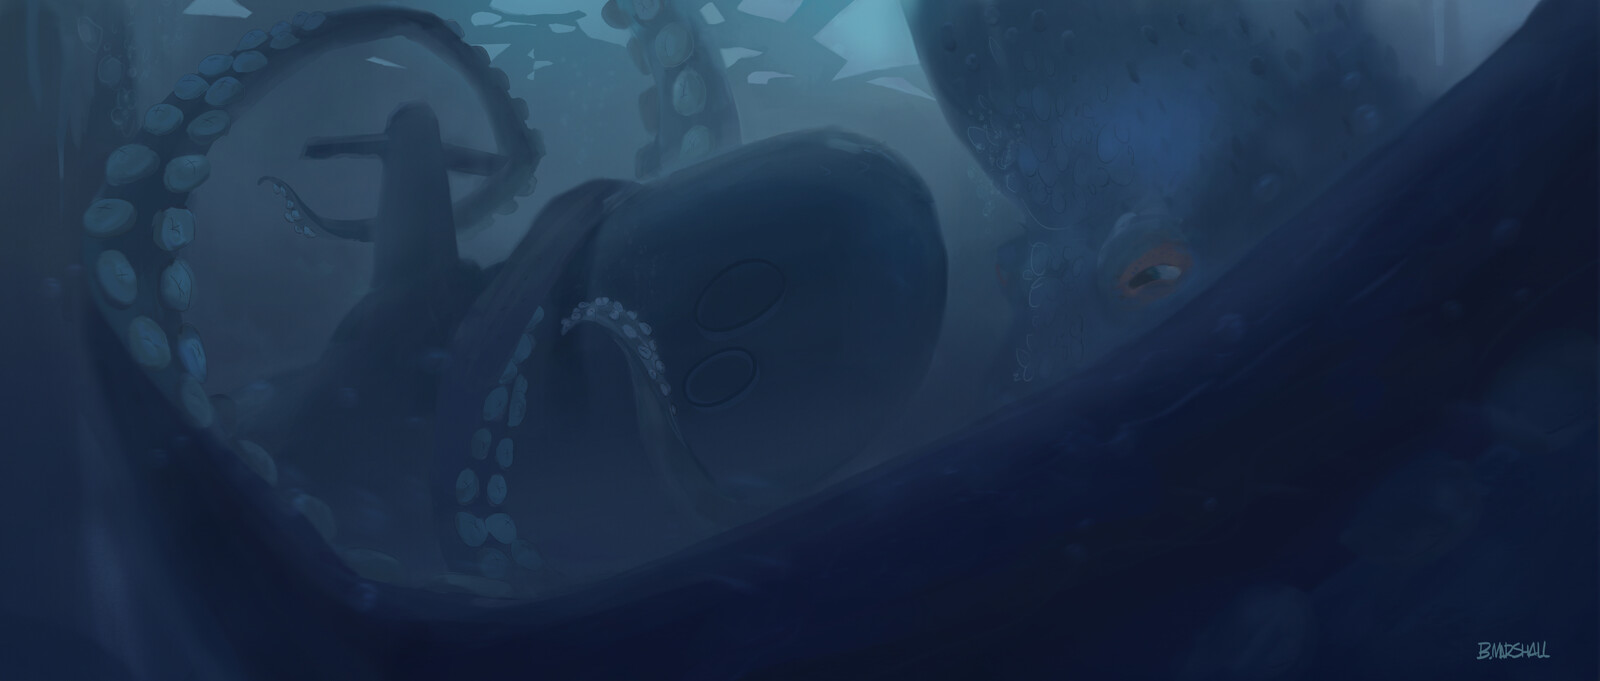 Mentorship Class - Octopus attacking submarine